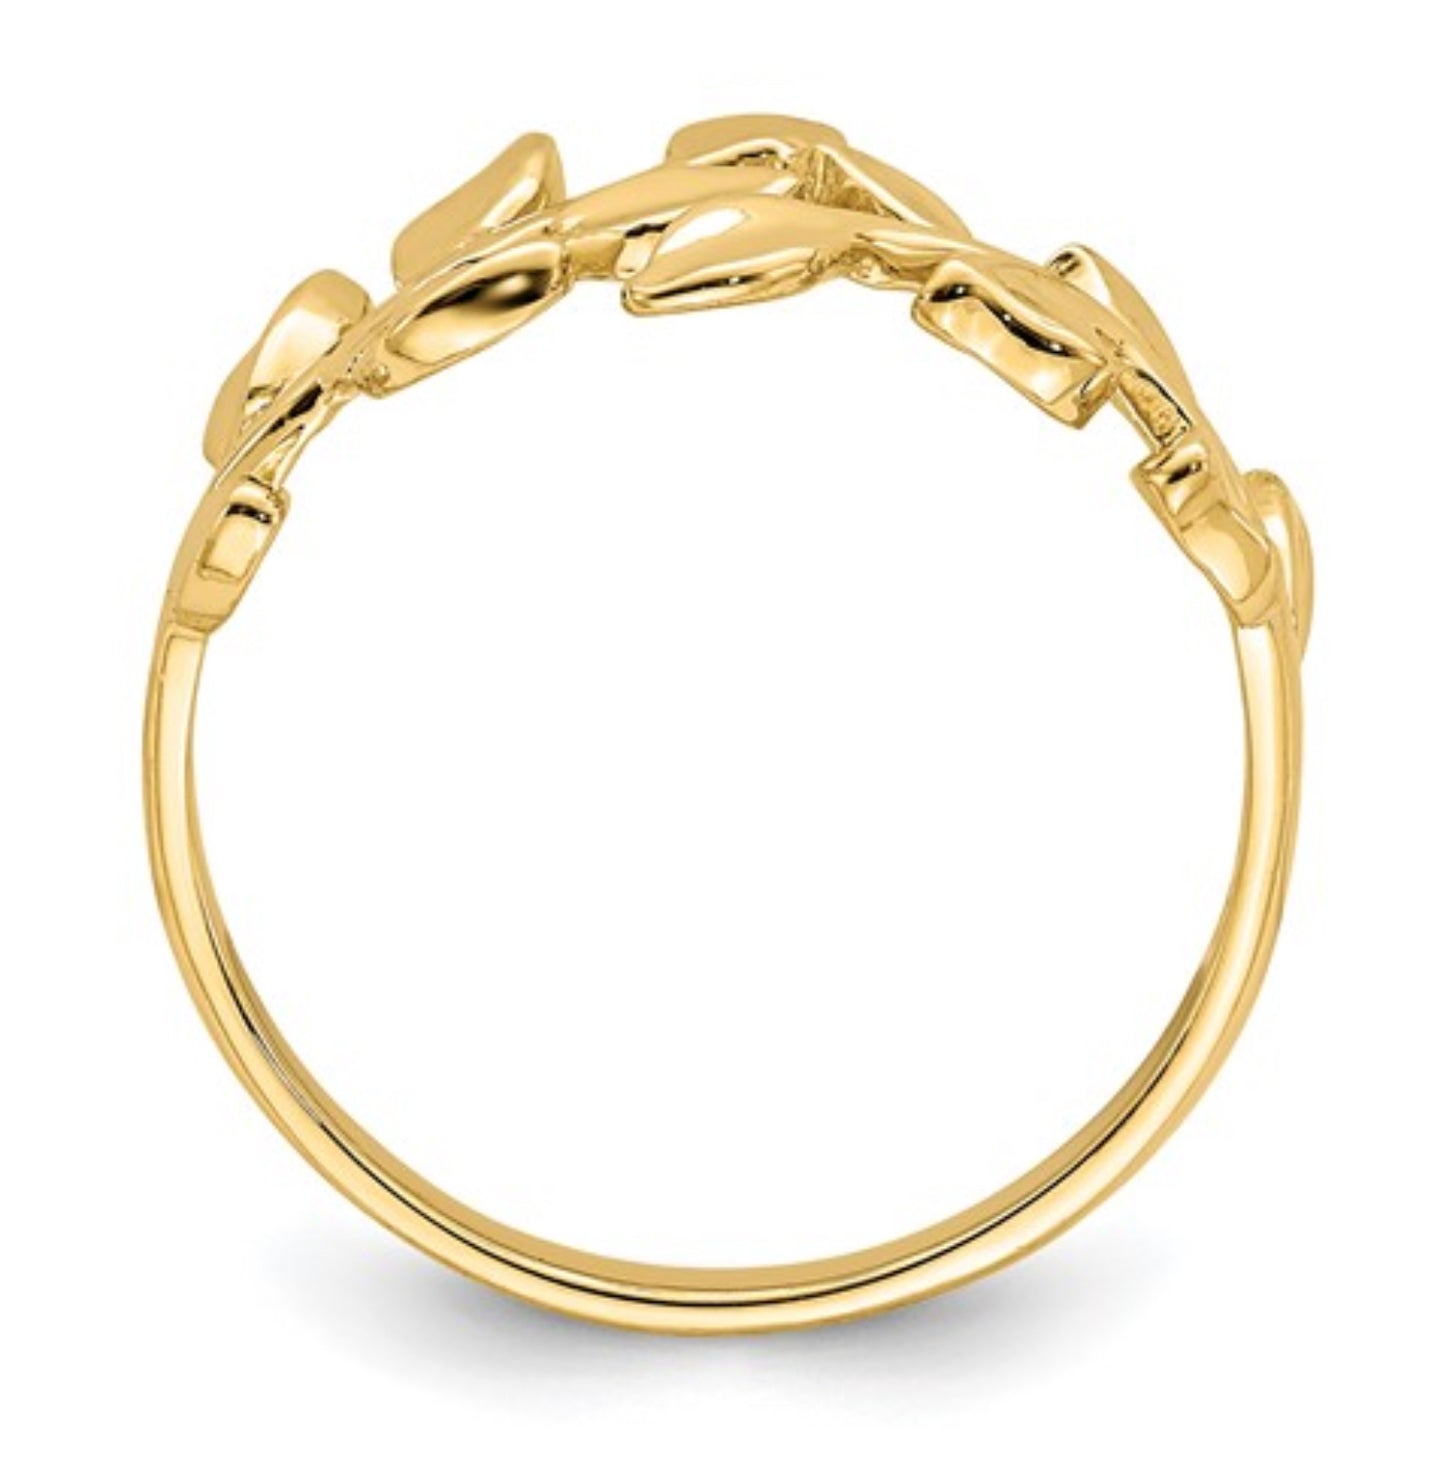 14k Yellow Gold Leaf Ring